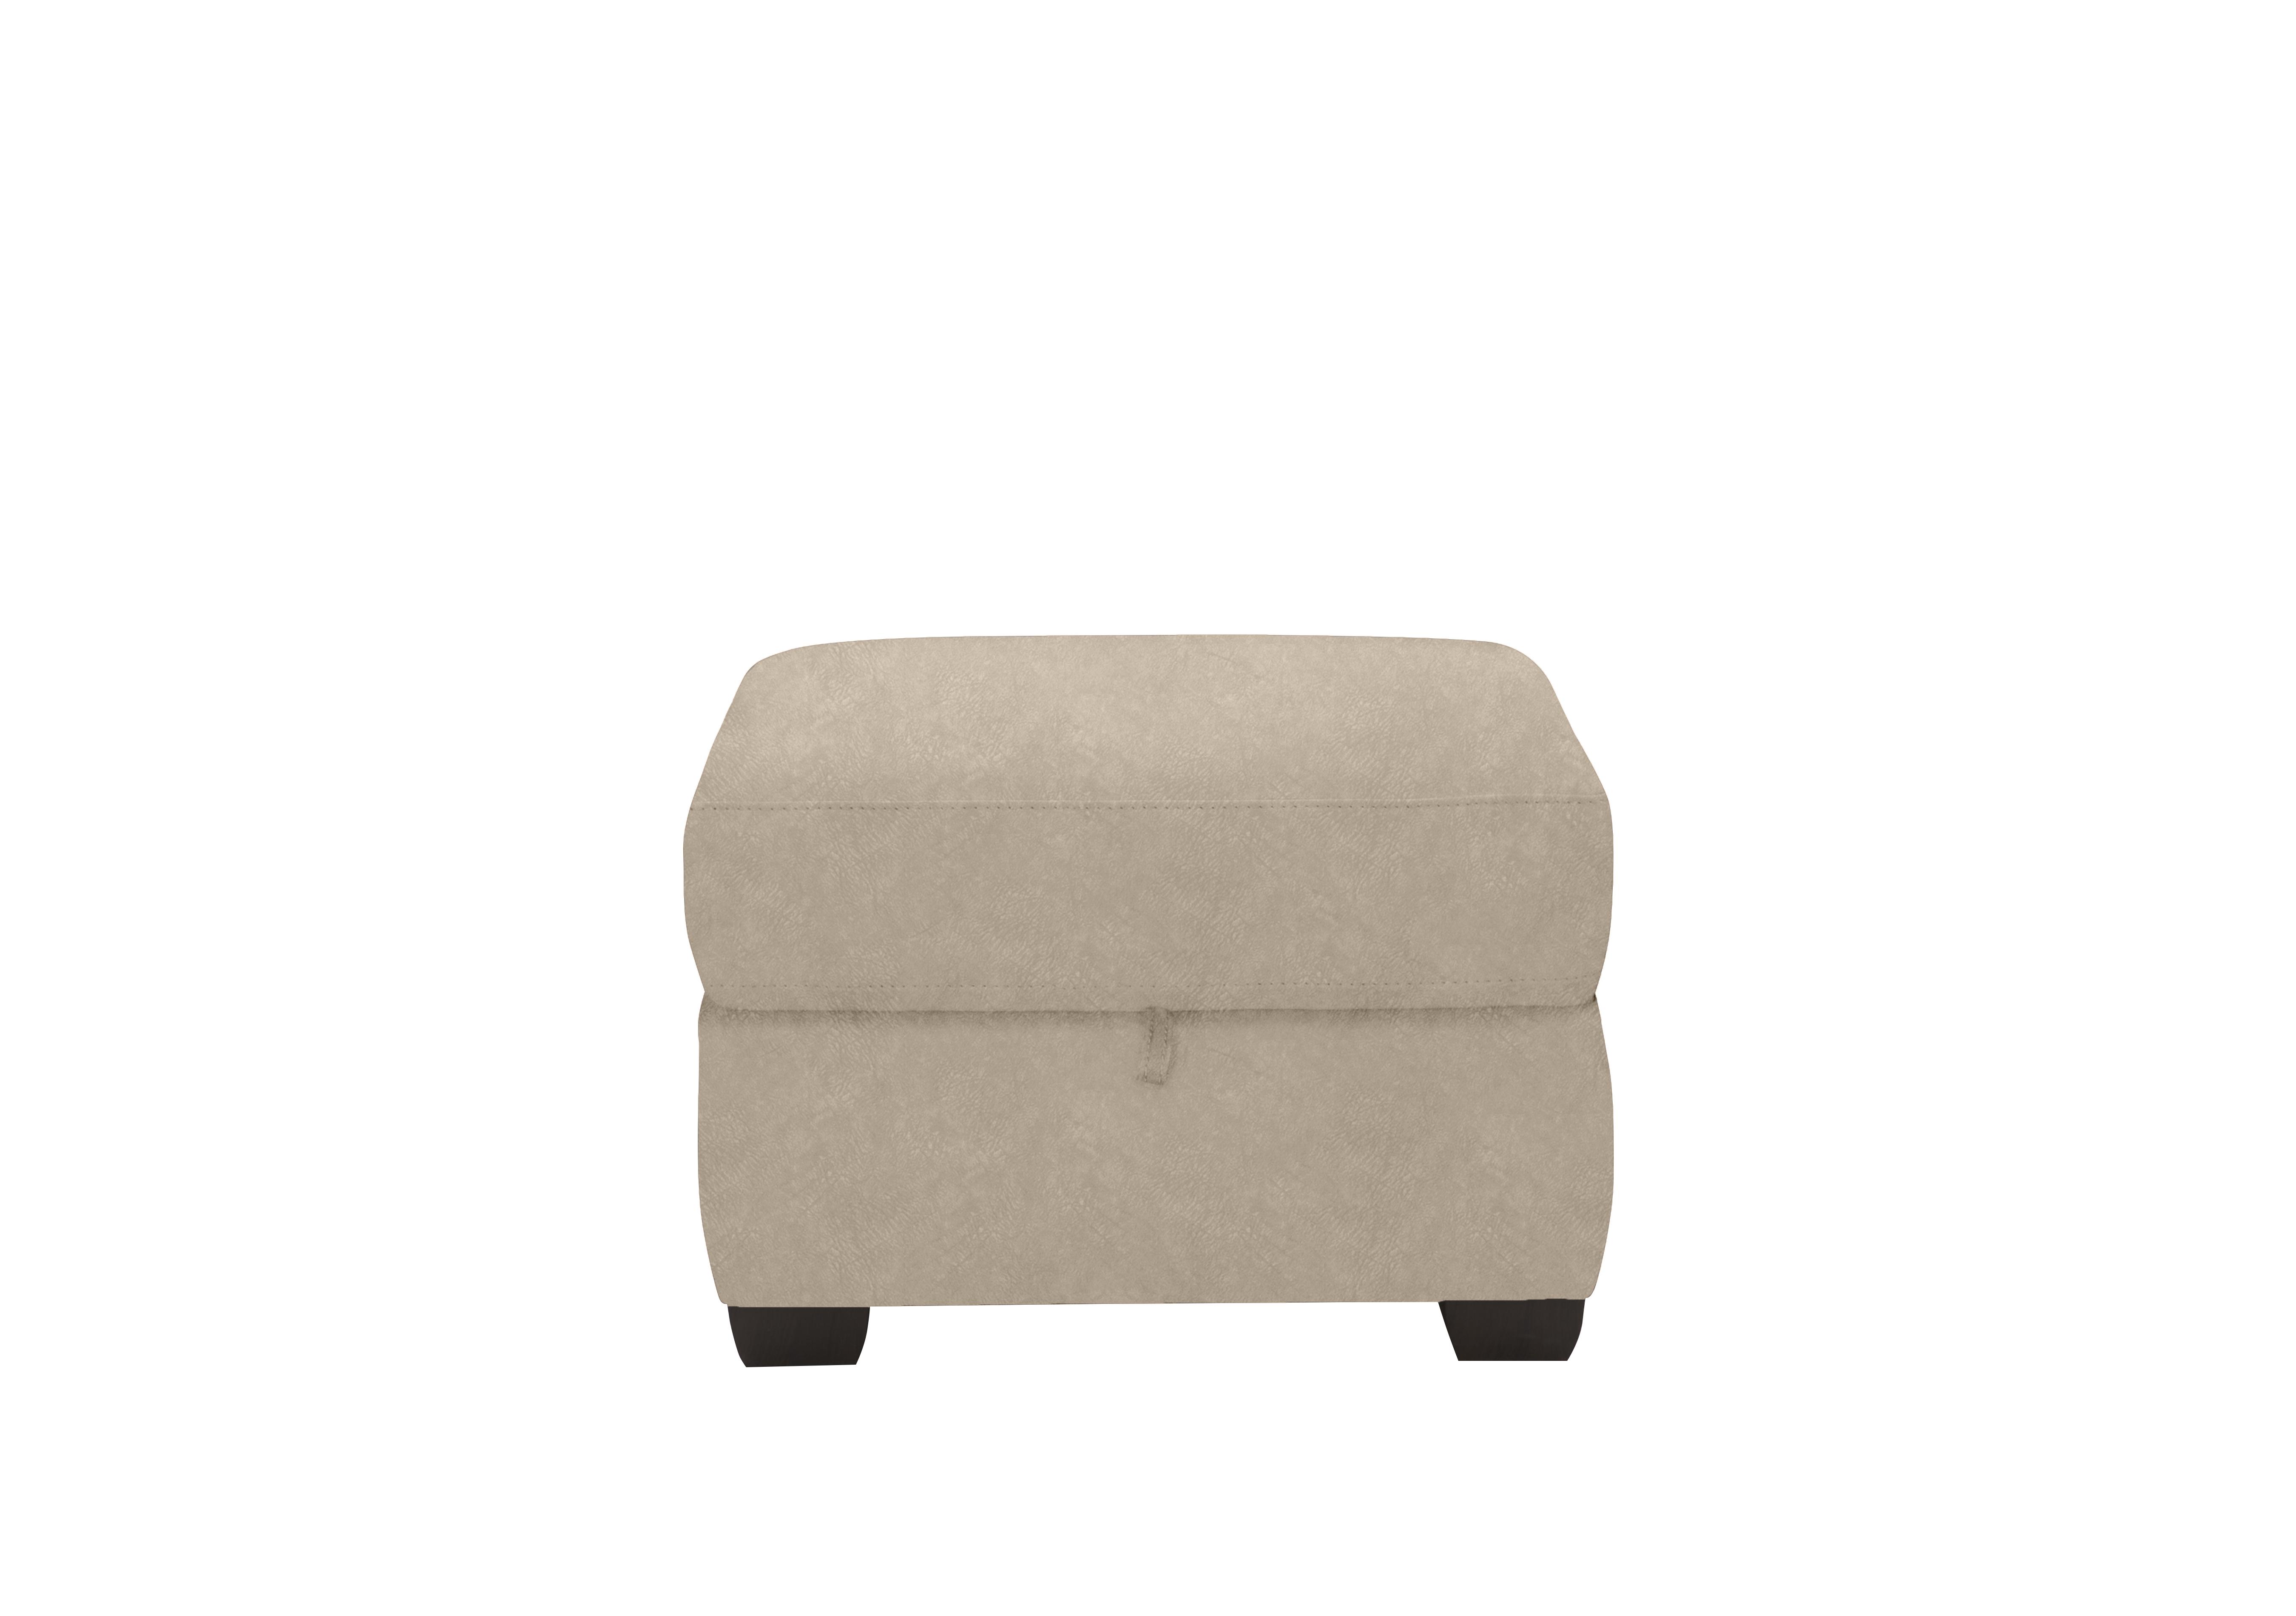 Optimus Fabric Storage Footstool in Bfa-Bnn-R26 Fv2 Cream on Furniture Village